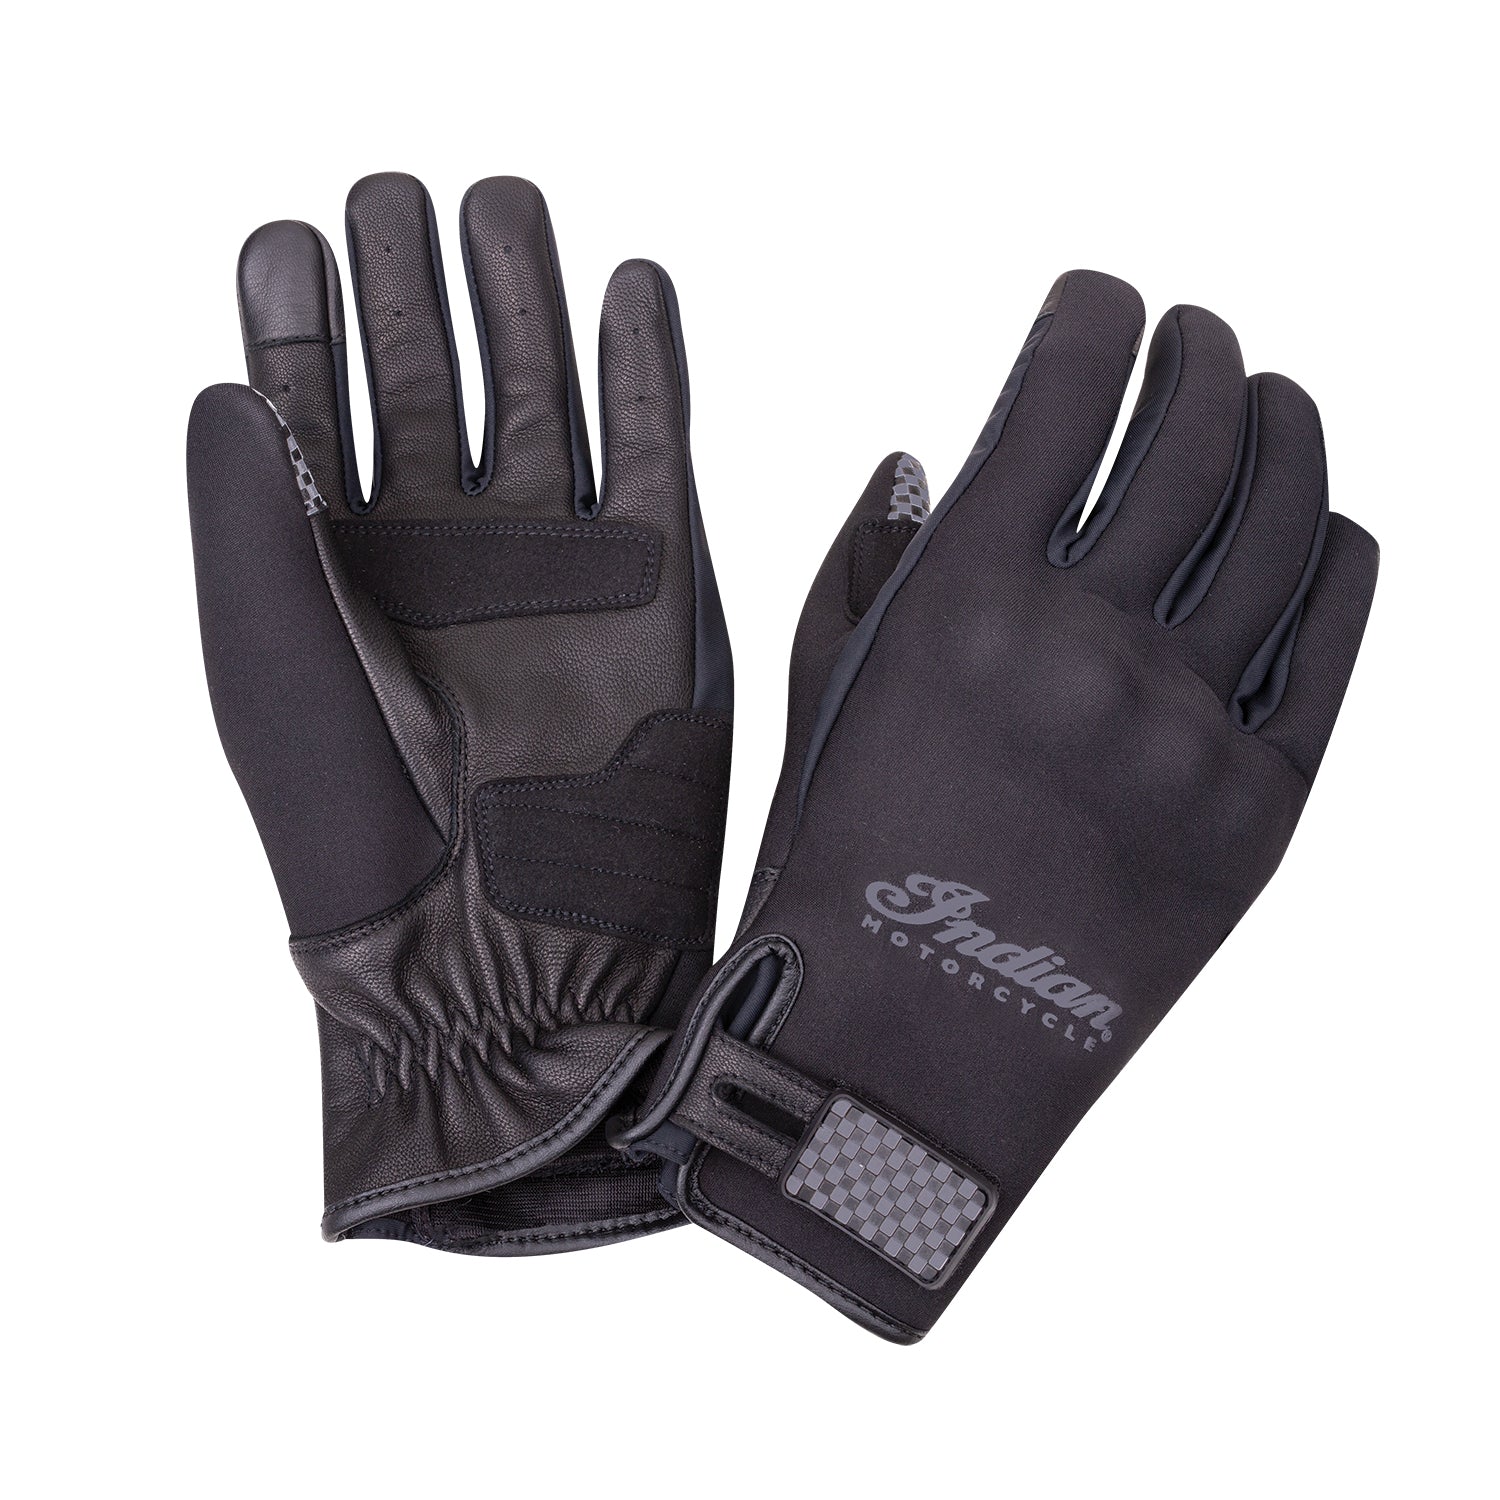 Men's Neoprene Flat Track Riding Gloves with Hard Knuckles, Black